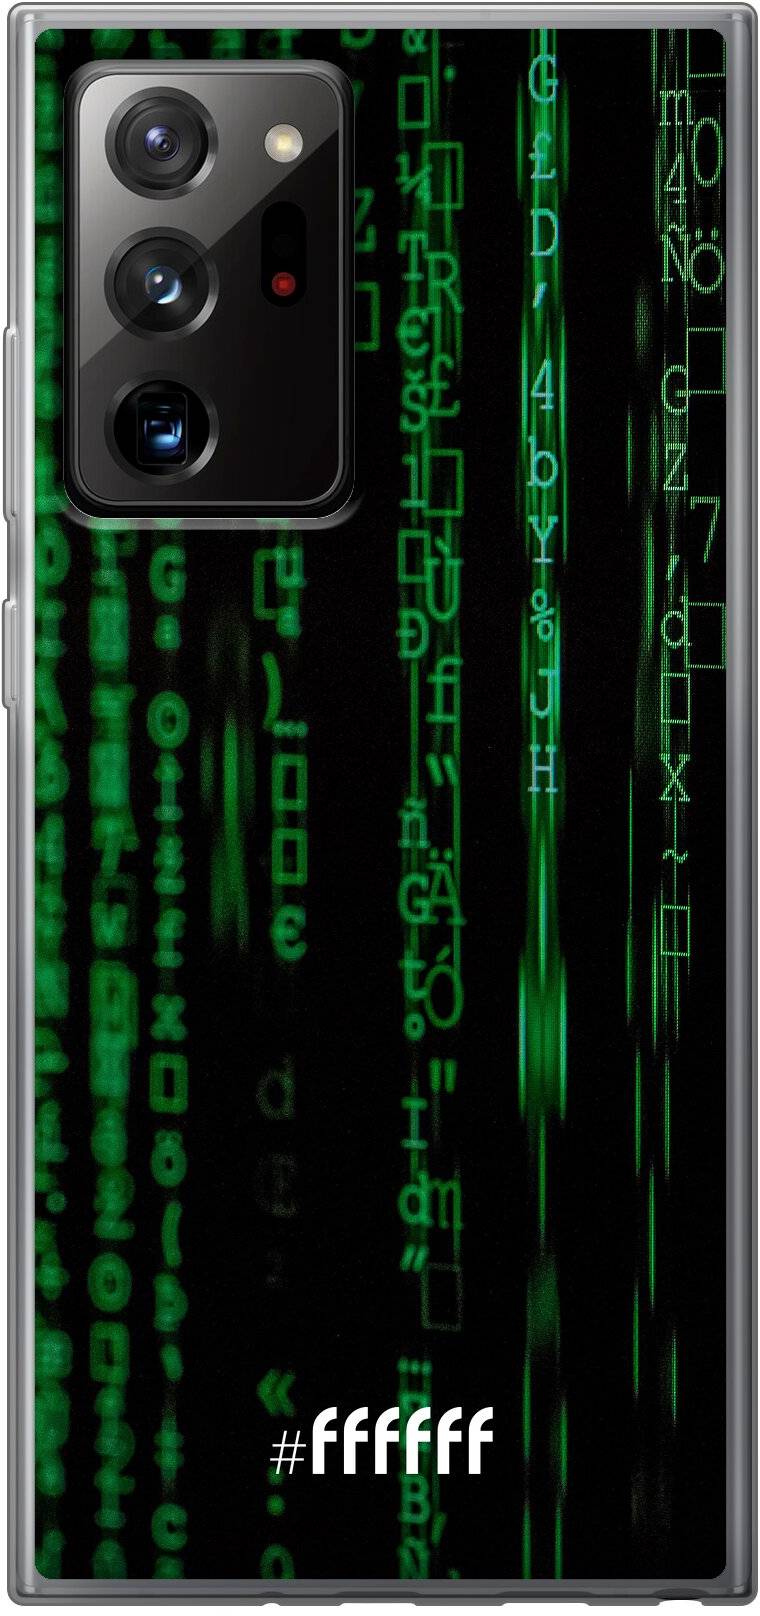 Hacking The Matrix Galaxy Note 20 Ultra